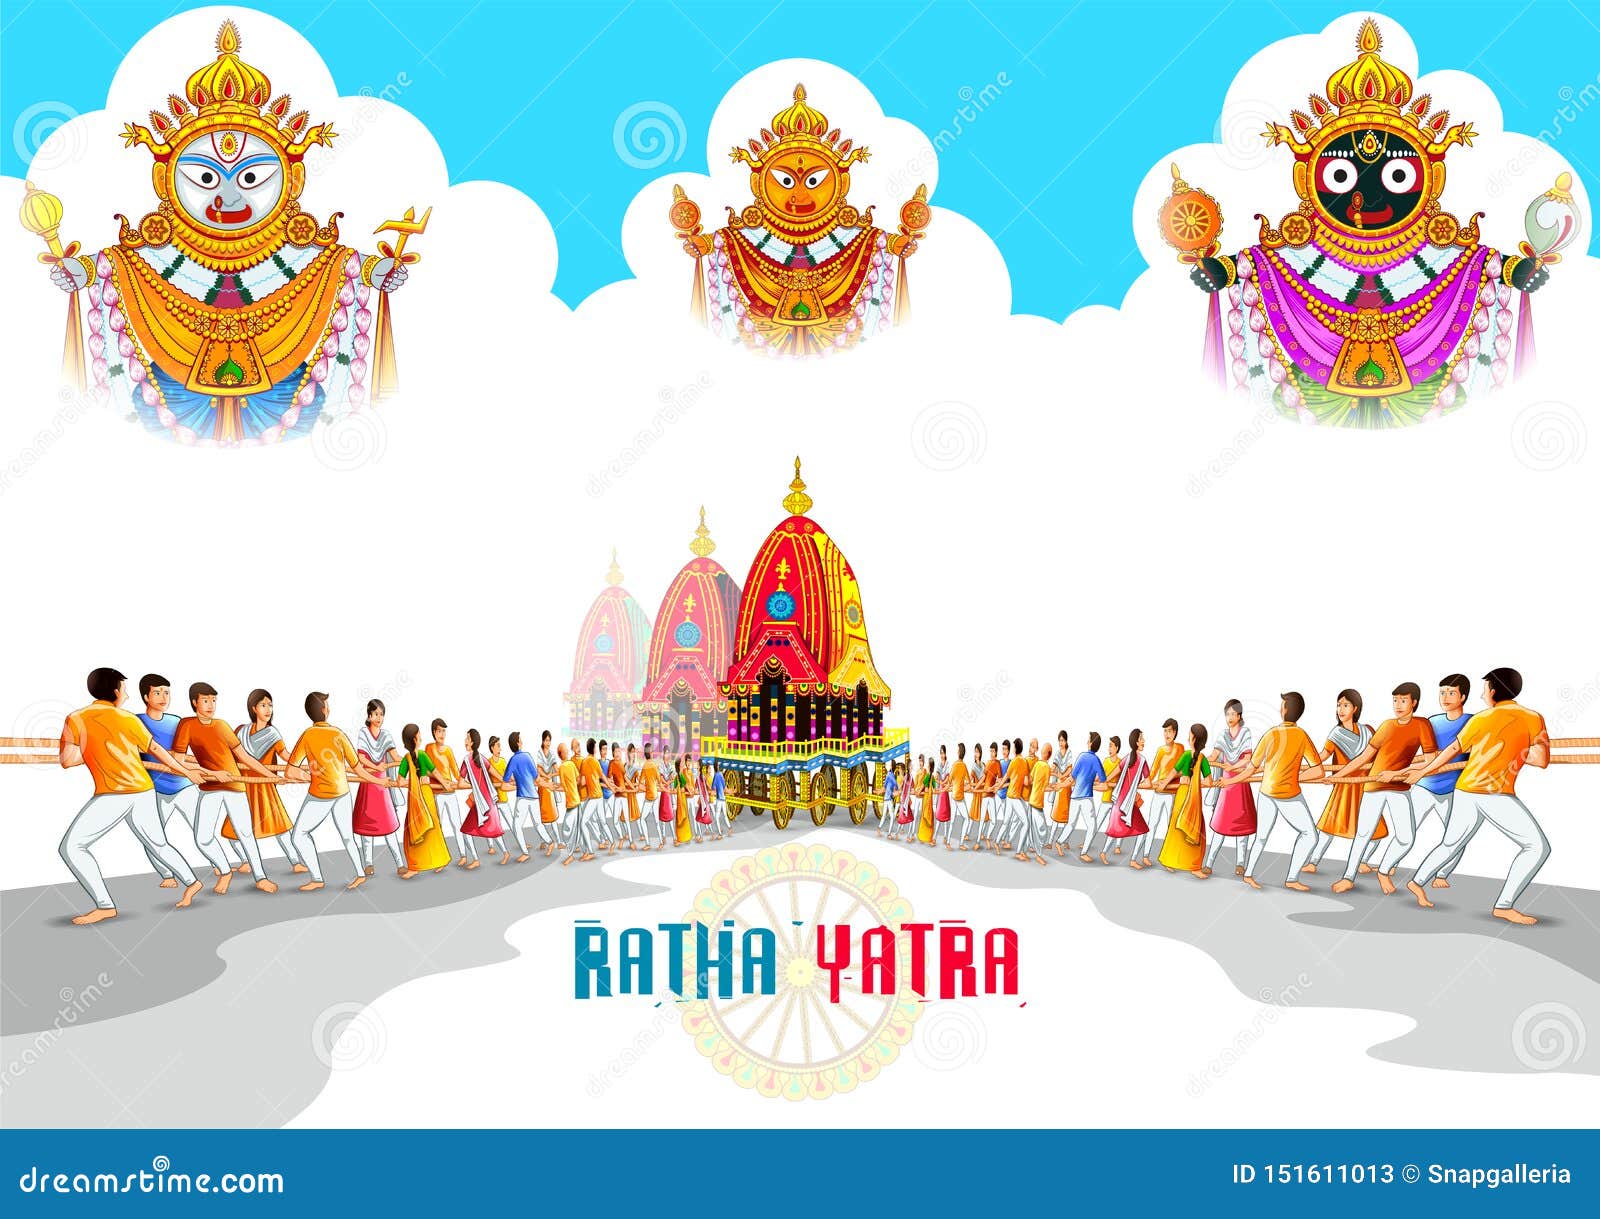 Rath Yatra | Easy drawings, Art drawings for kids, Rath yatra